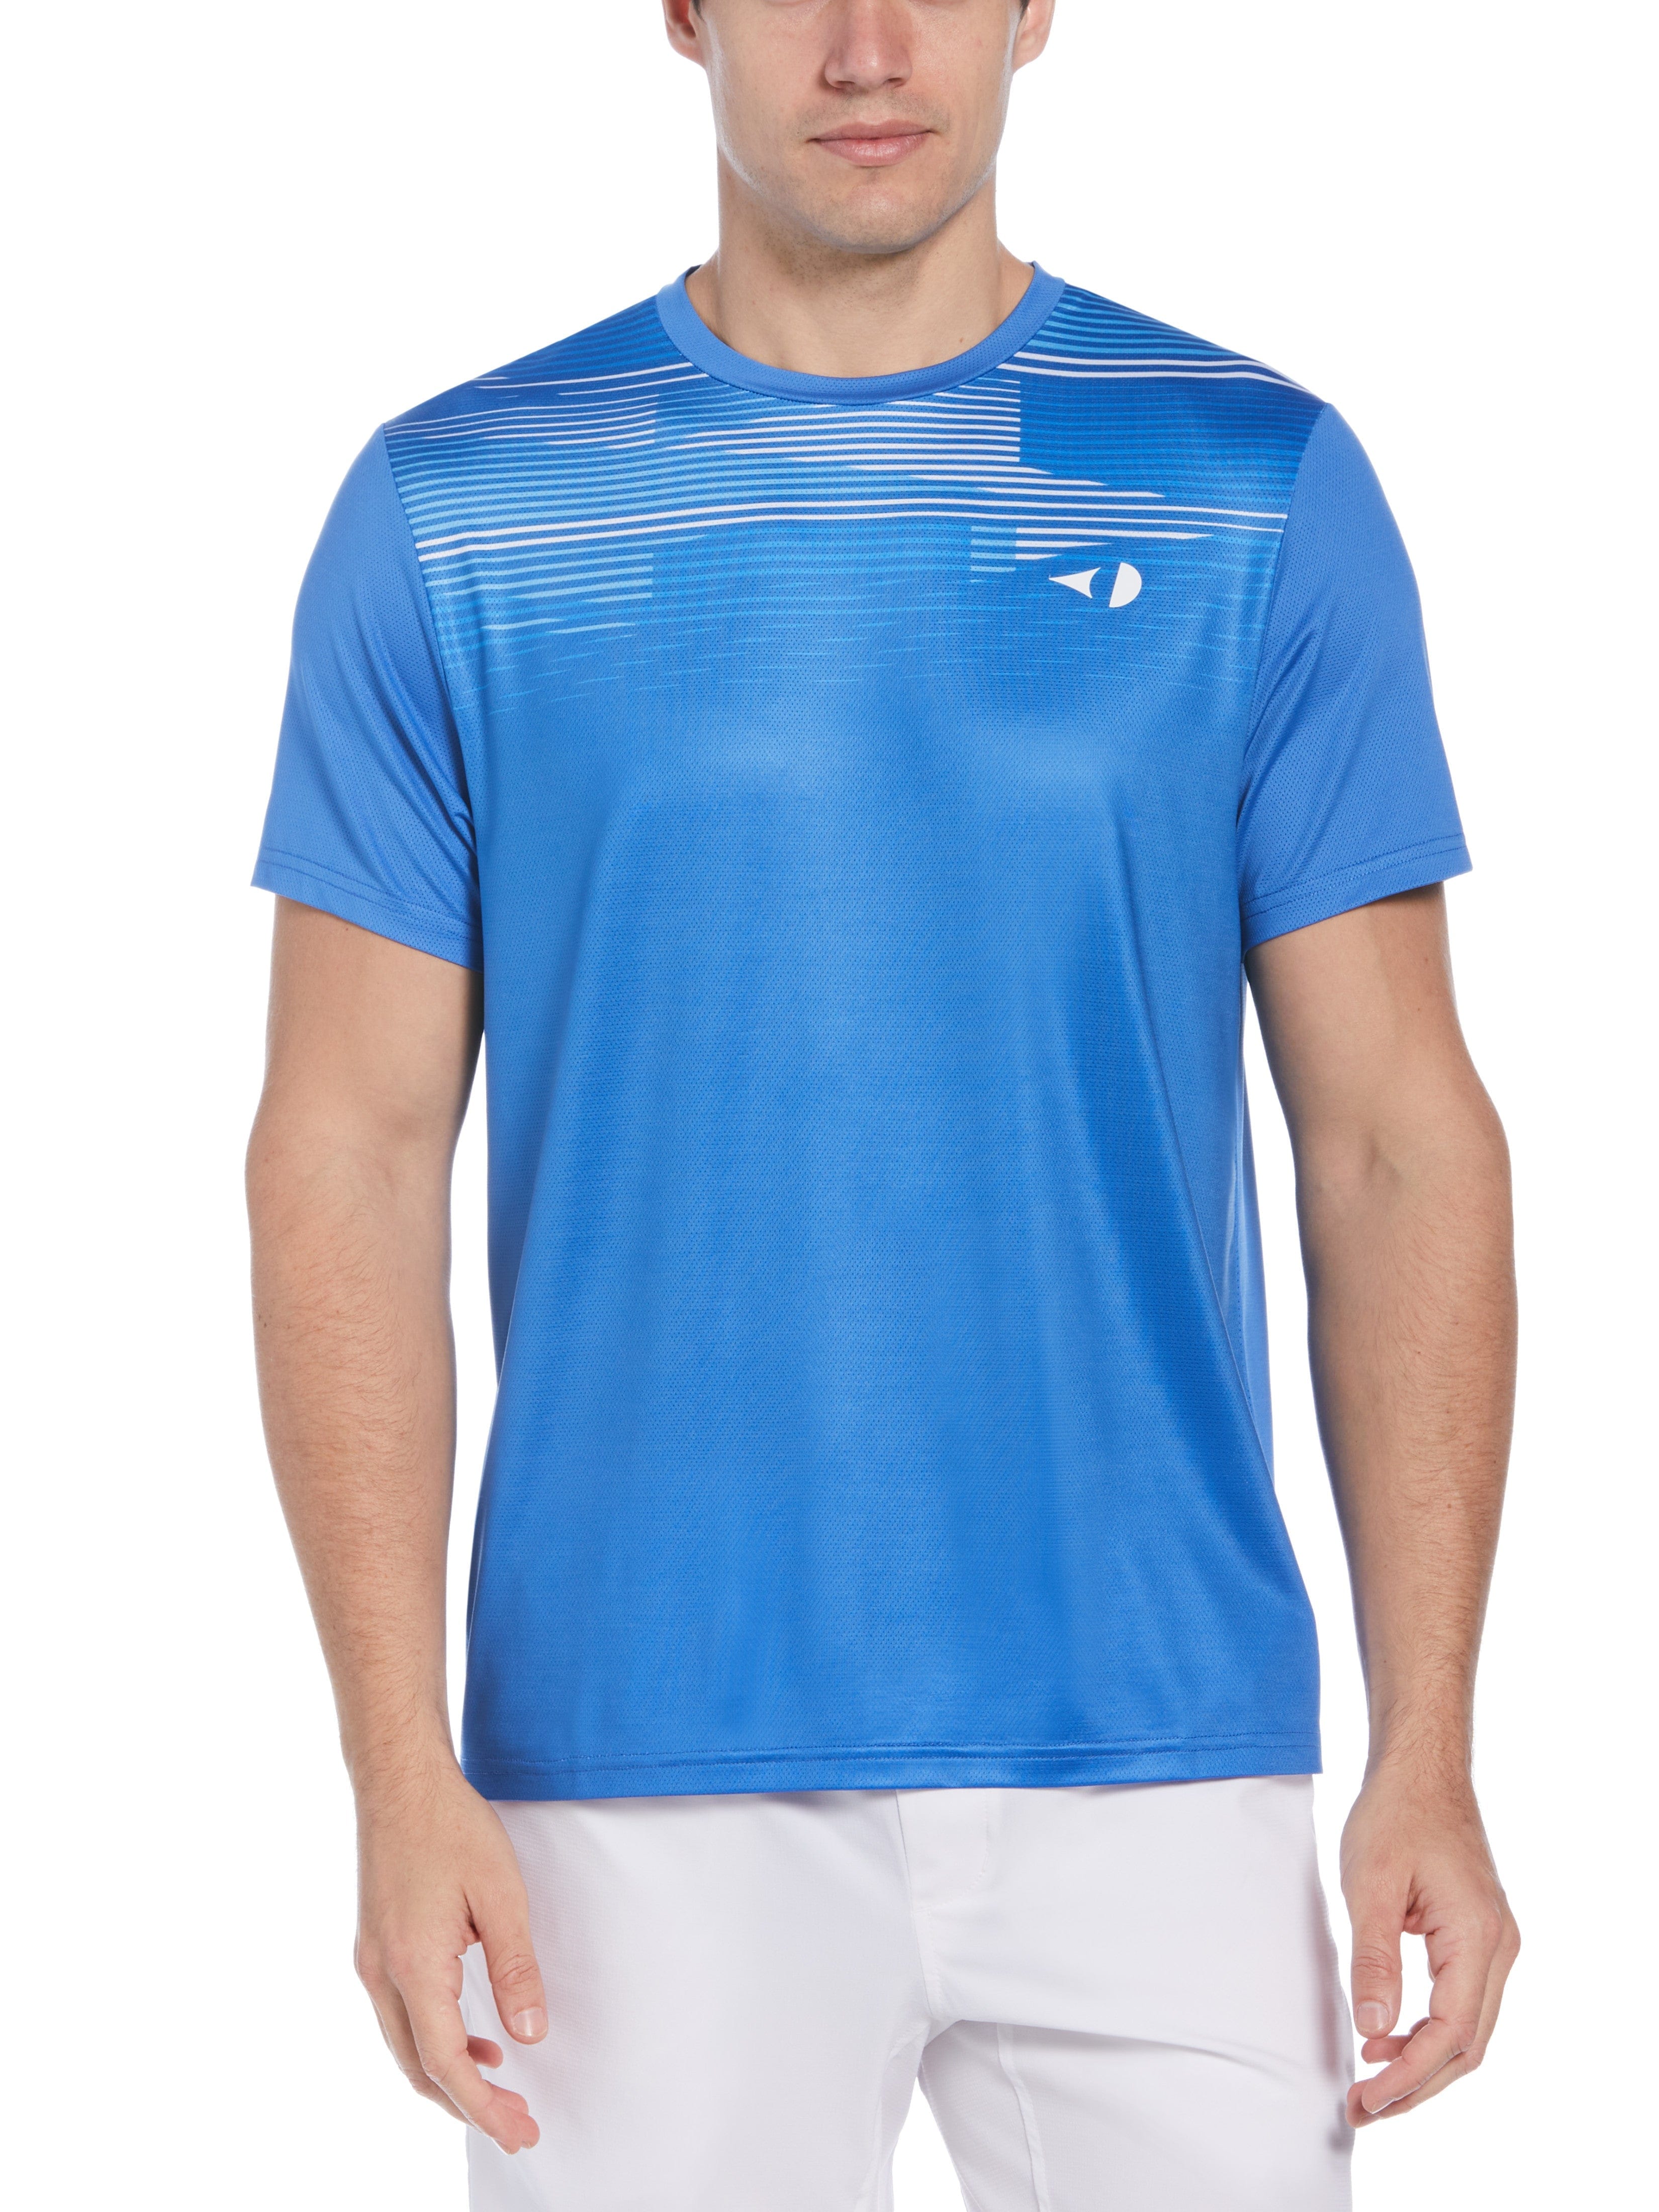 Grand Slam Mens Linear Chest Printed Tennis T-Shirt, Size 2XL, Egyptian Blue, Polyester/Spandex | Golf Apparel Shop